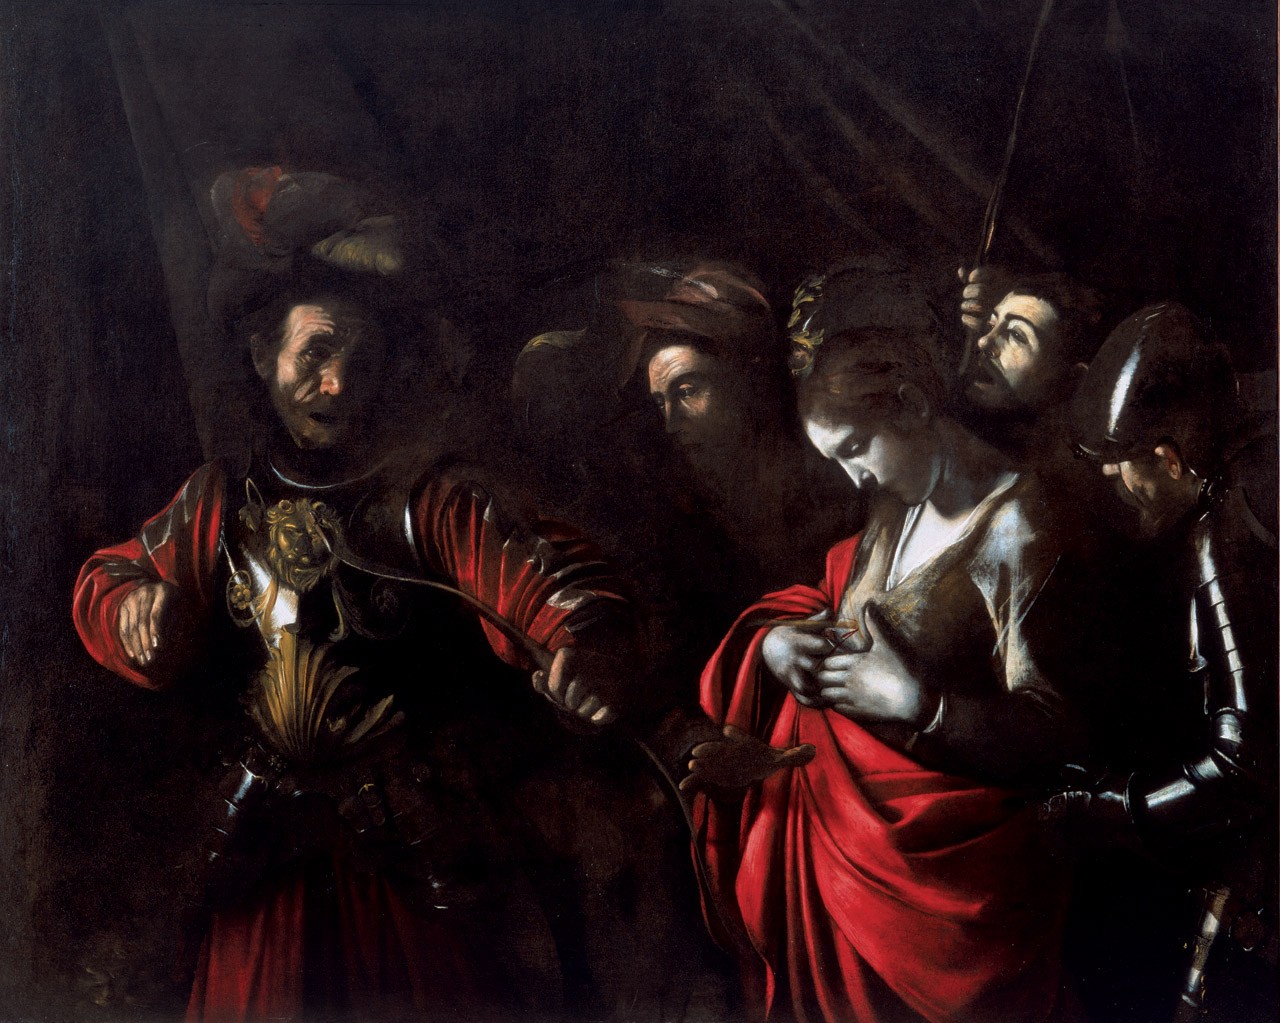 Caravaggio, Martyrdom of Saint Ursula